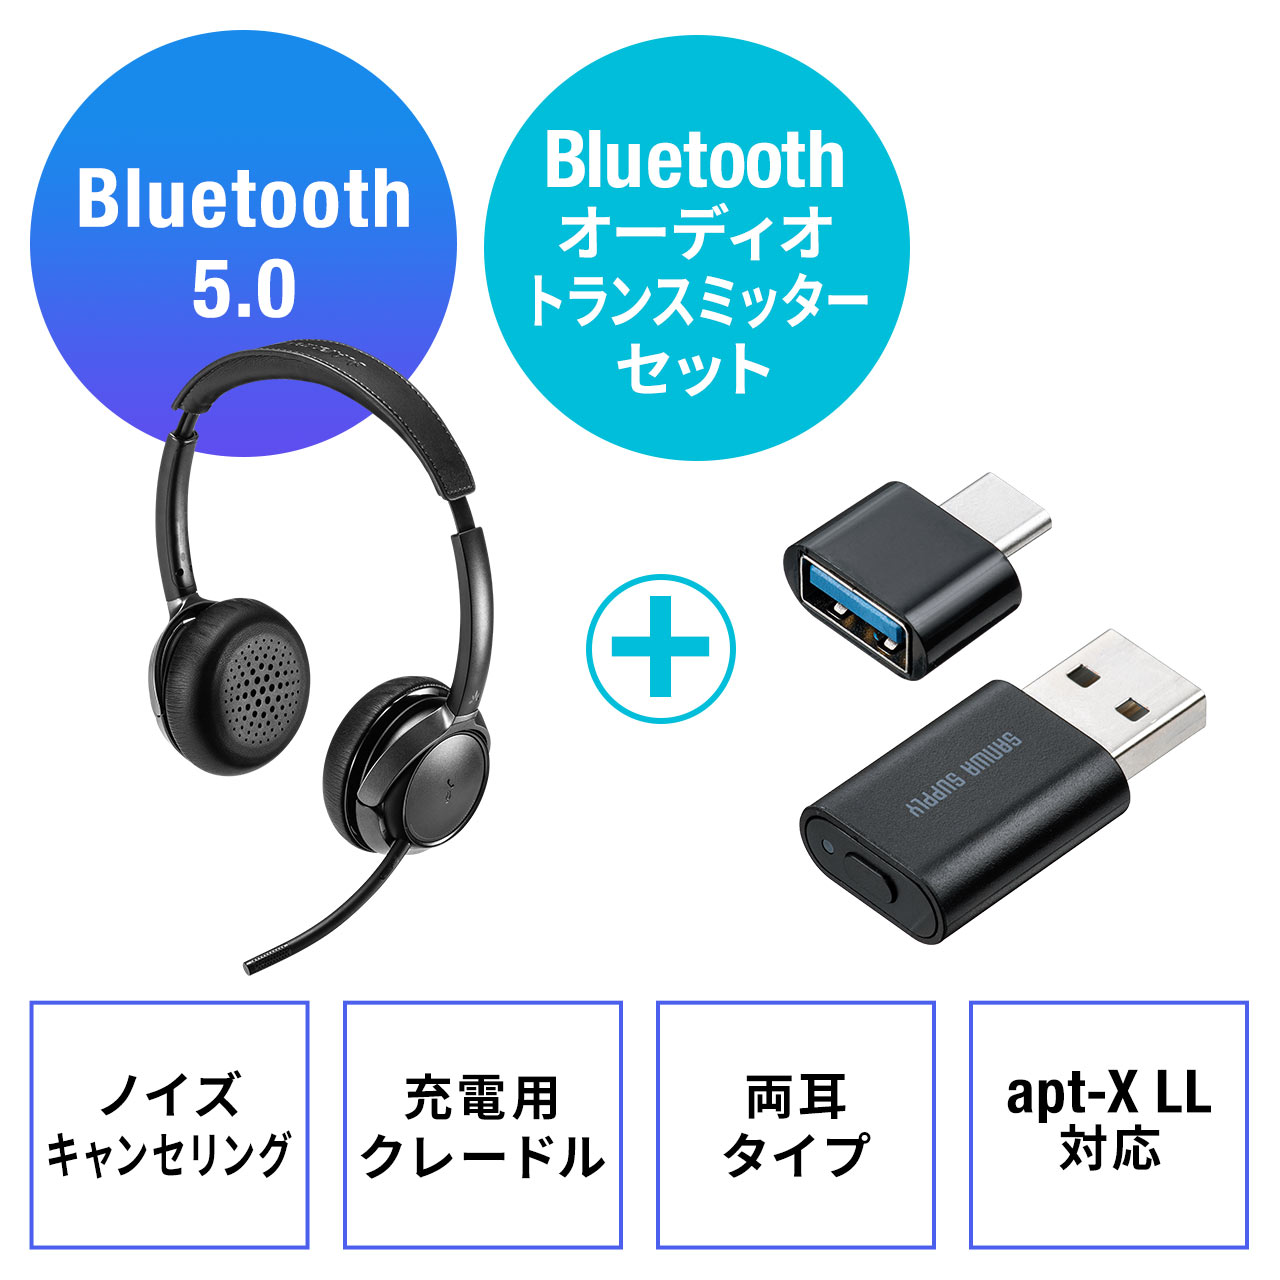 BluetoothwbhZbgEgX~b^[Zbg 402-BTSH018SET1